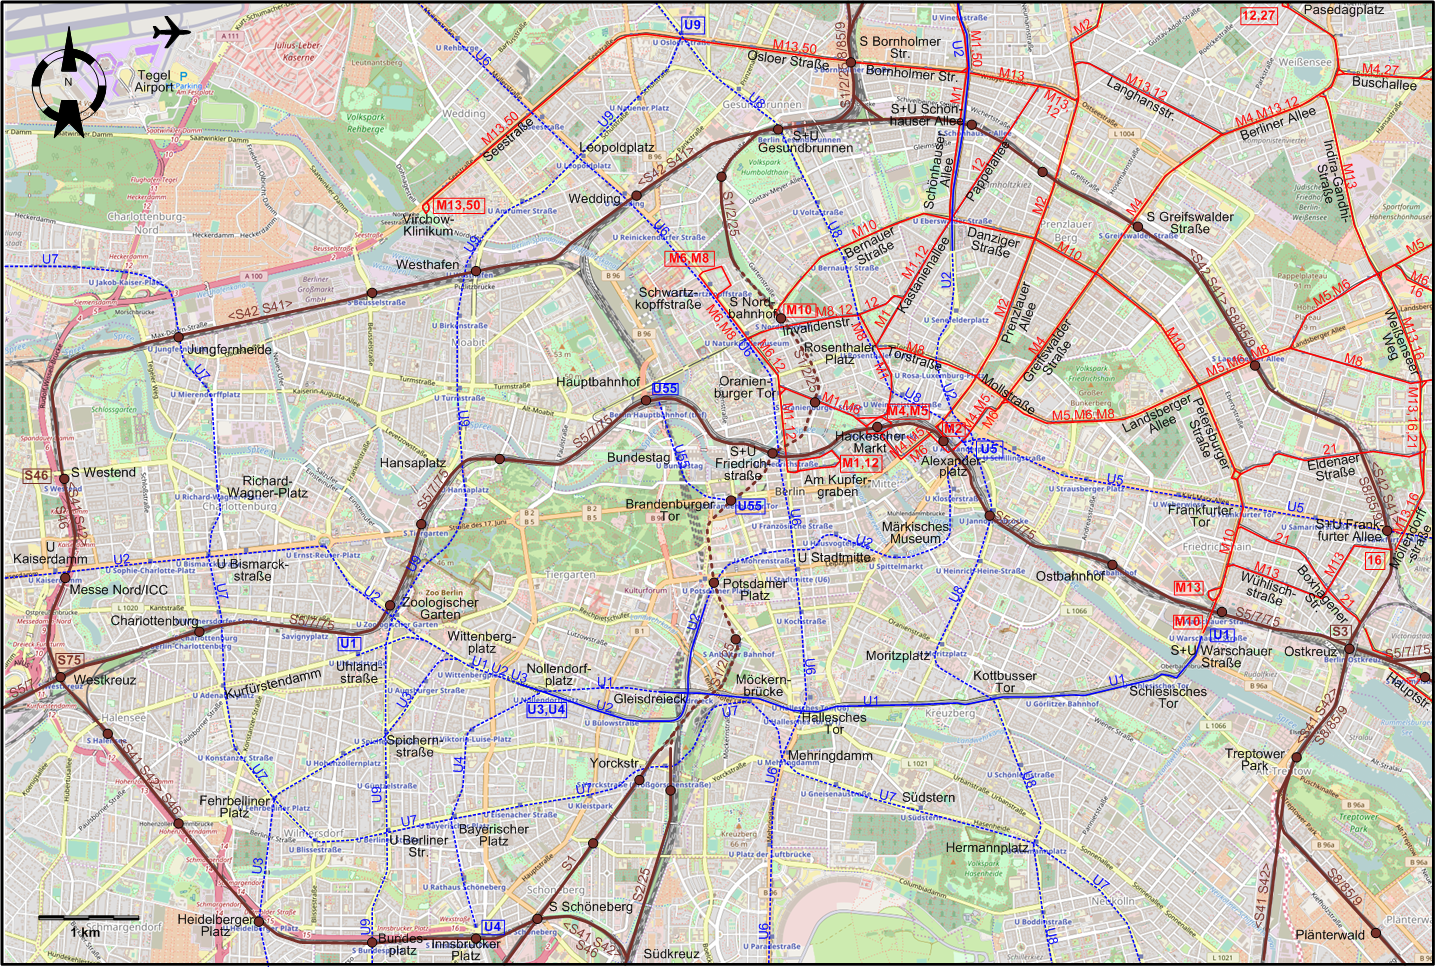 Berlin 2010 central tram map